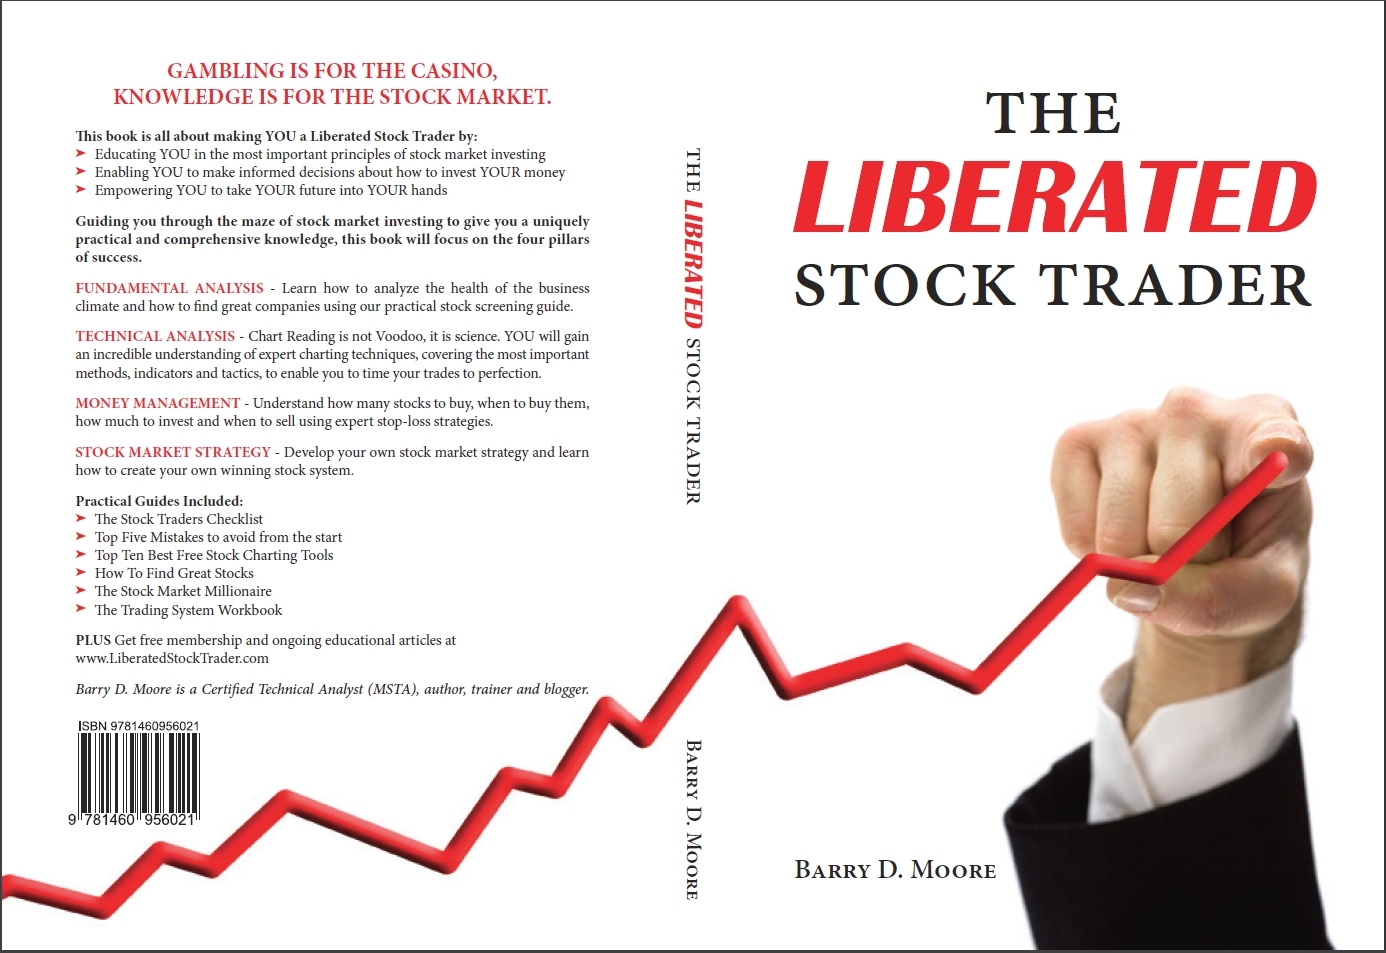 stock market investing basics book